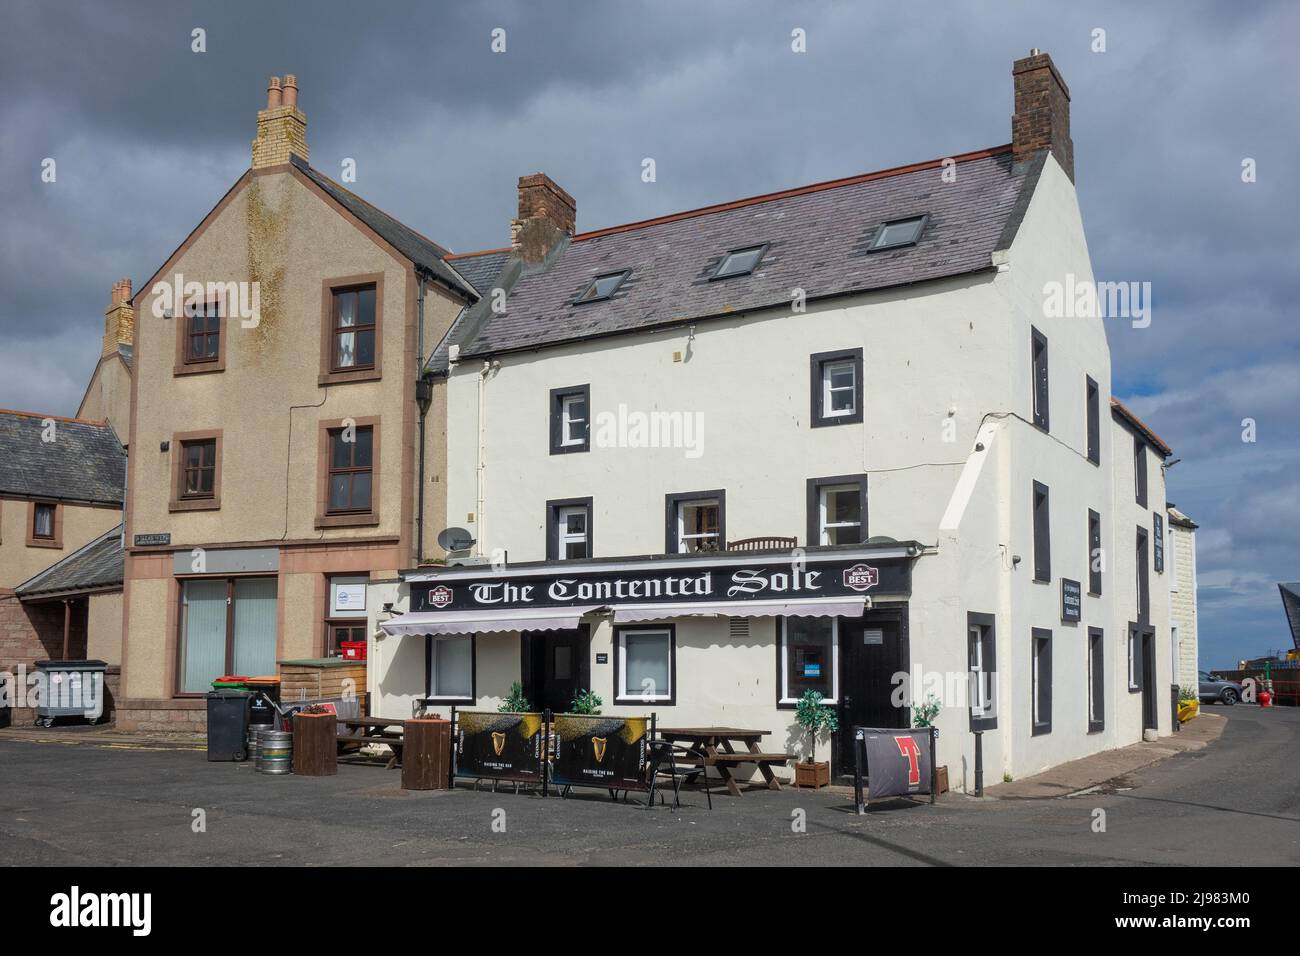 Scotland, Berwicksire, Eyemouth, Contented Sole pub Stock Photo